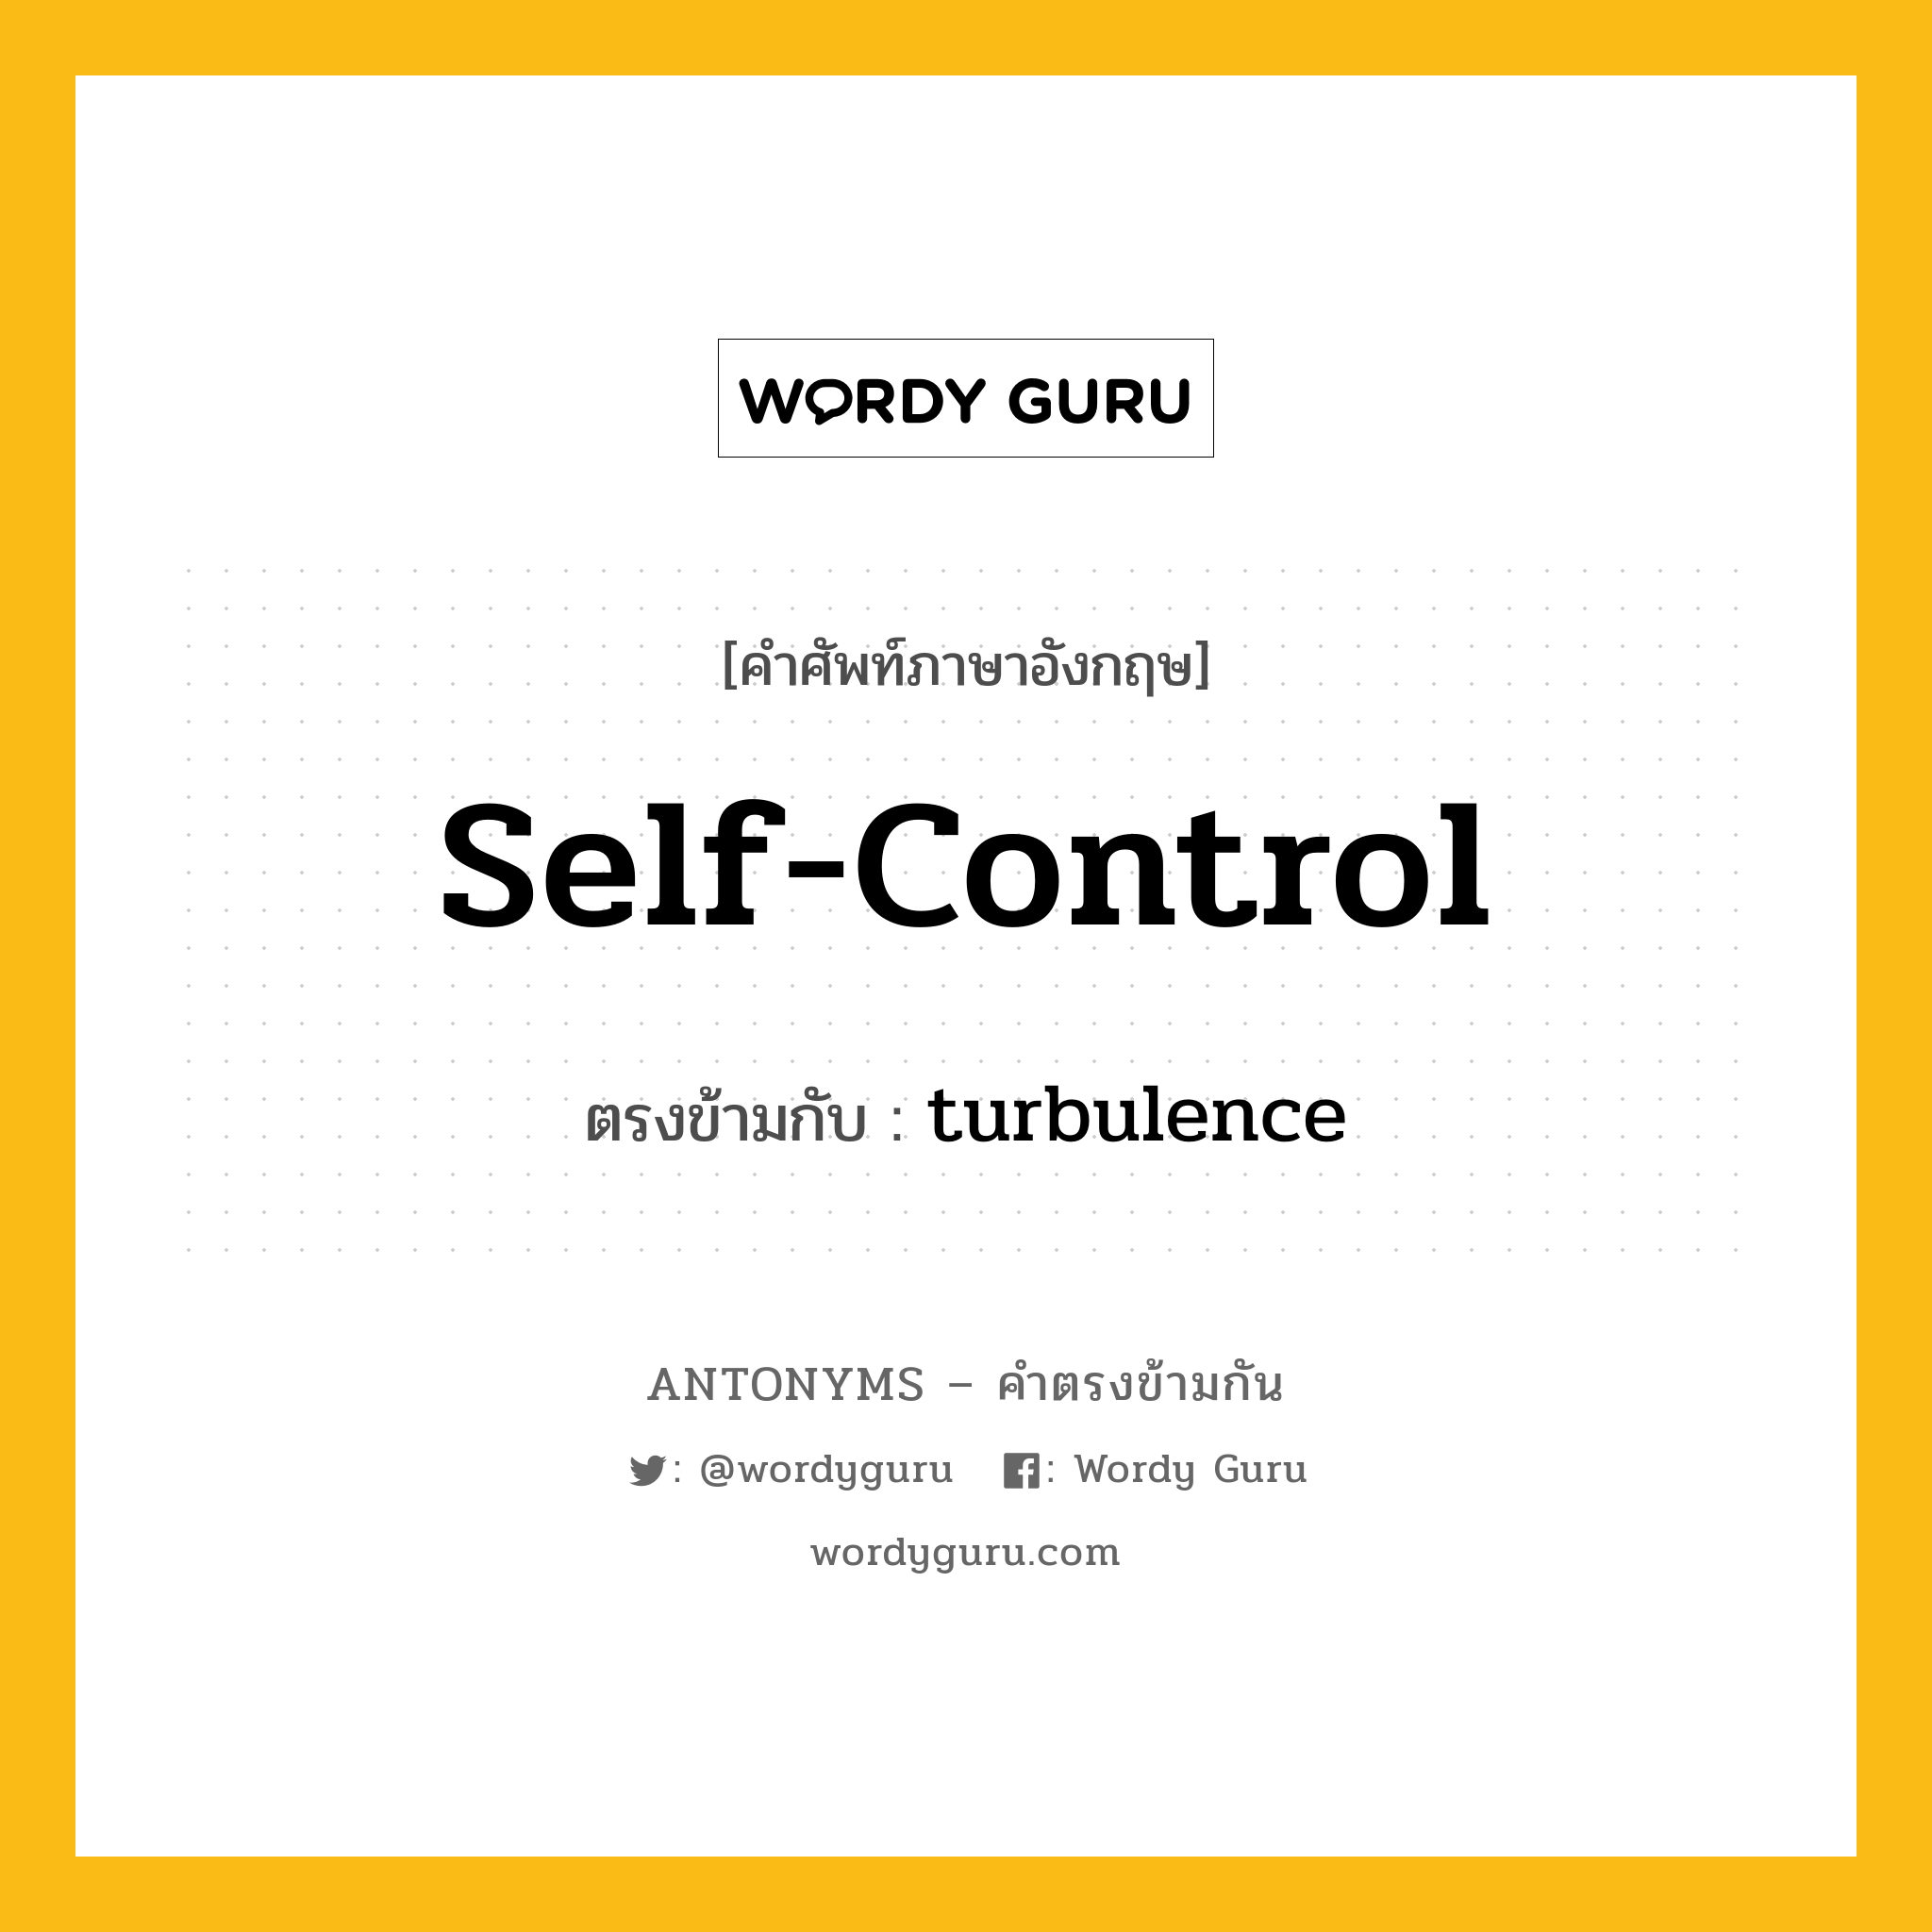 self-control เป็นคำตรงข้ามกับคำไหนบ้าง?, คำศัพท์ภาษาอังกฤษที่มีความหมายตรงข้ามกัน self-control ตรงข้ามกับ turbulence หมวด turbulence